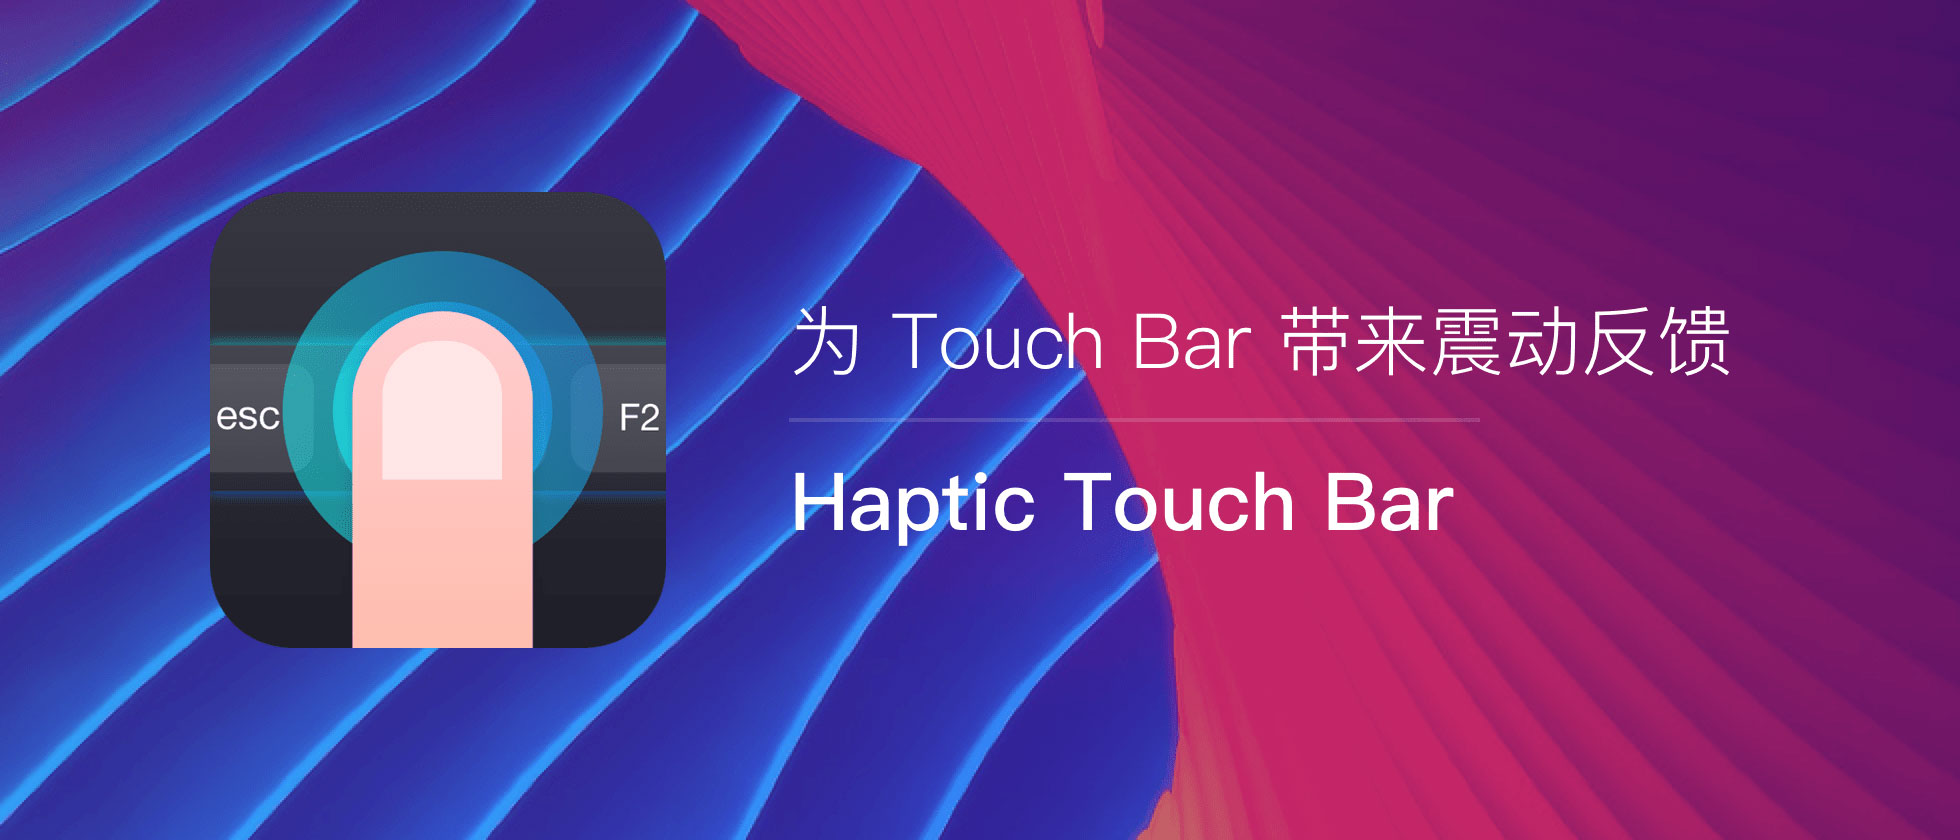 正版 Haptic Touch Bar - 为Touch Bar添加震动反馈工具软件